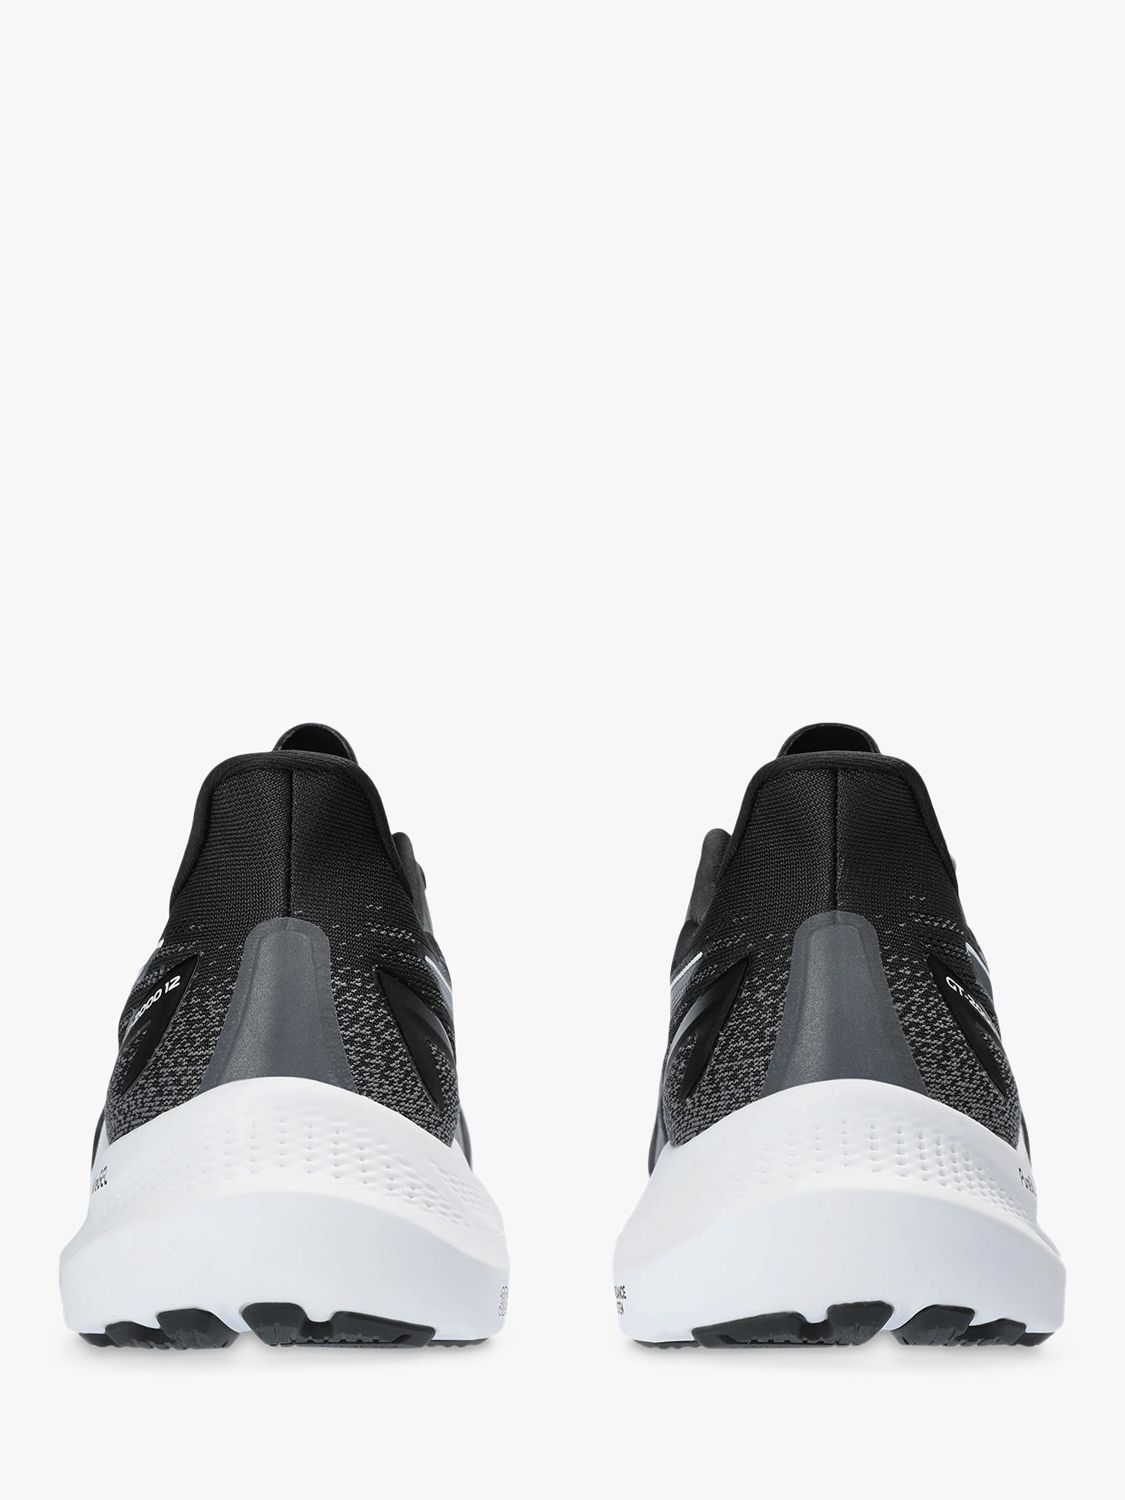 ASICS GT-2000 12 Men's Running Shoes, Black/Carrier Grey, 9